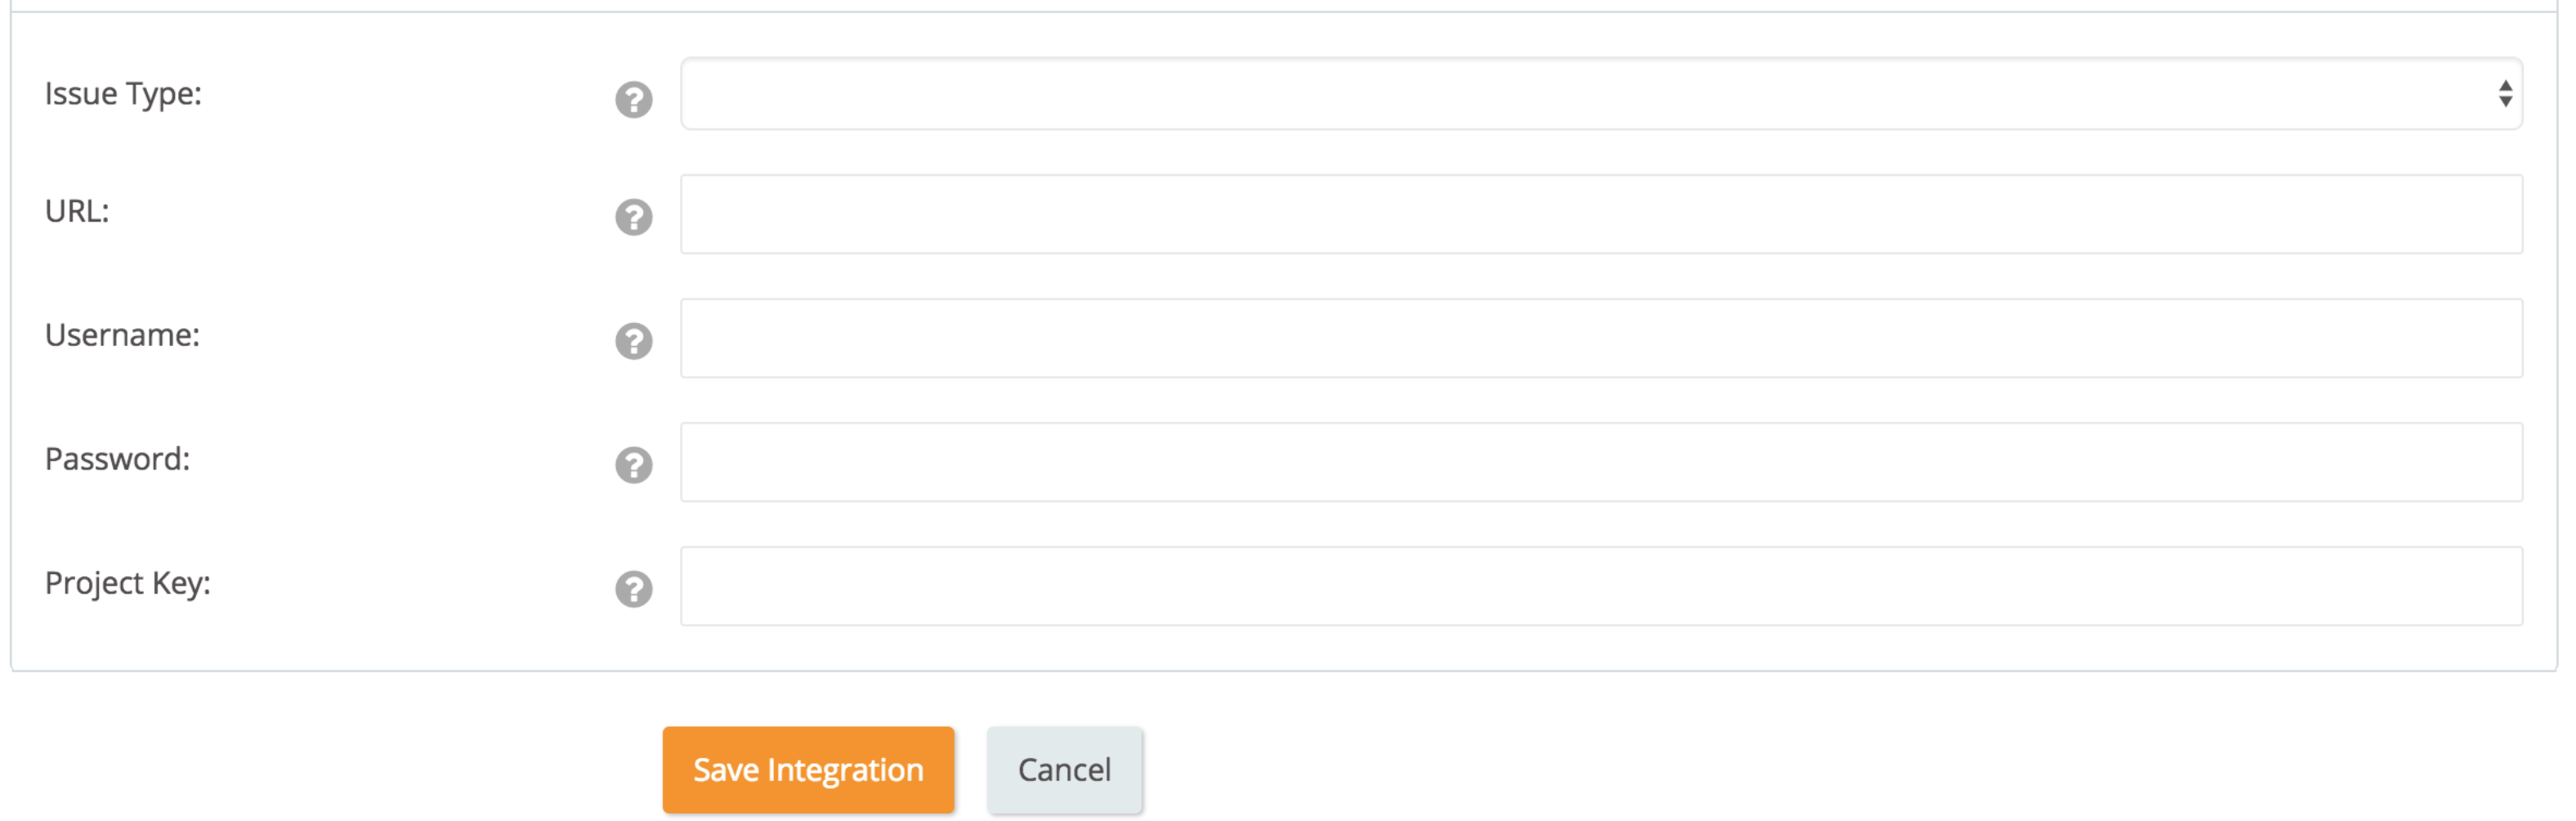 A screenshot showing extra OEC settings for Jira integration.